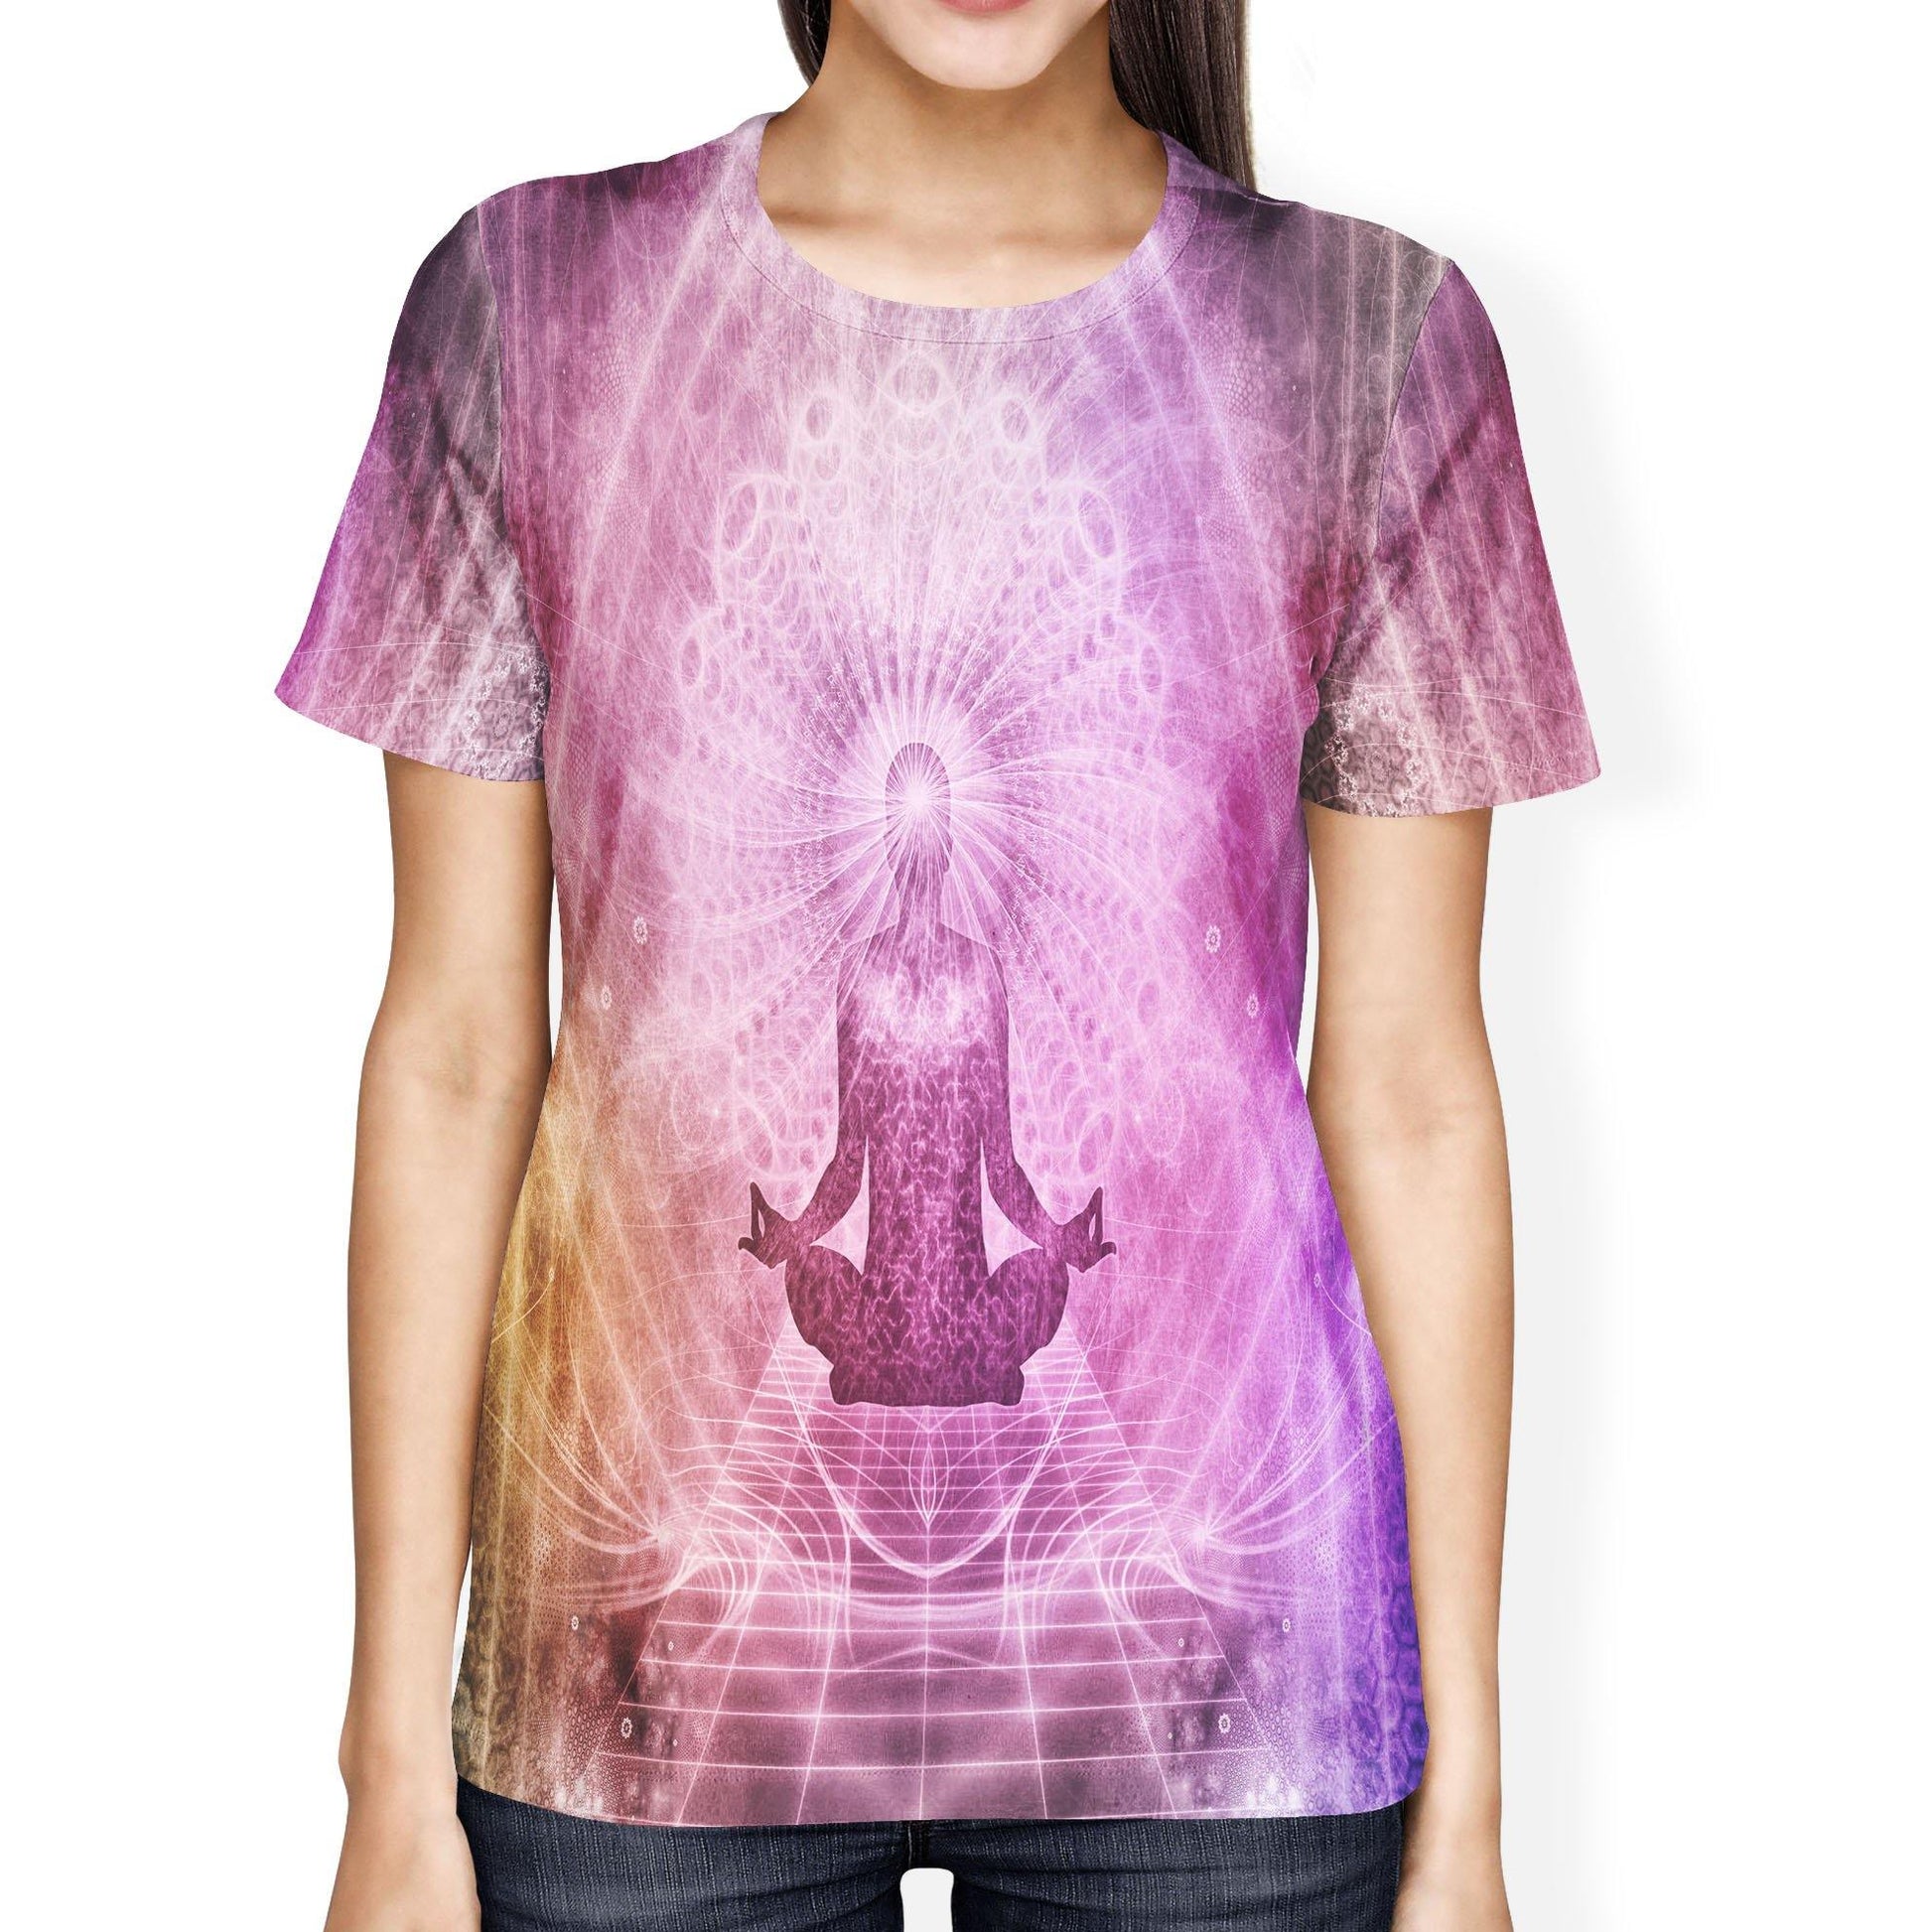 Meditation Ladies' T-shirt - USA Made Dropship